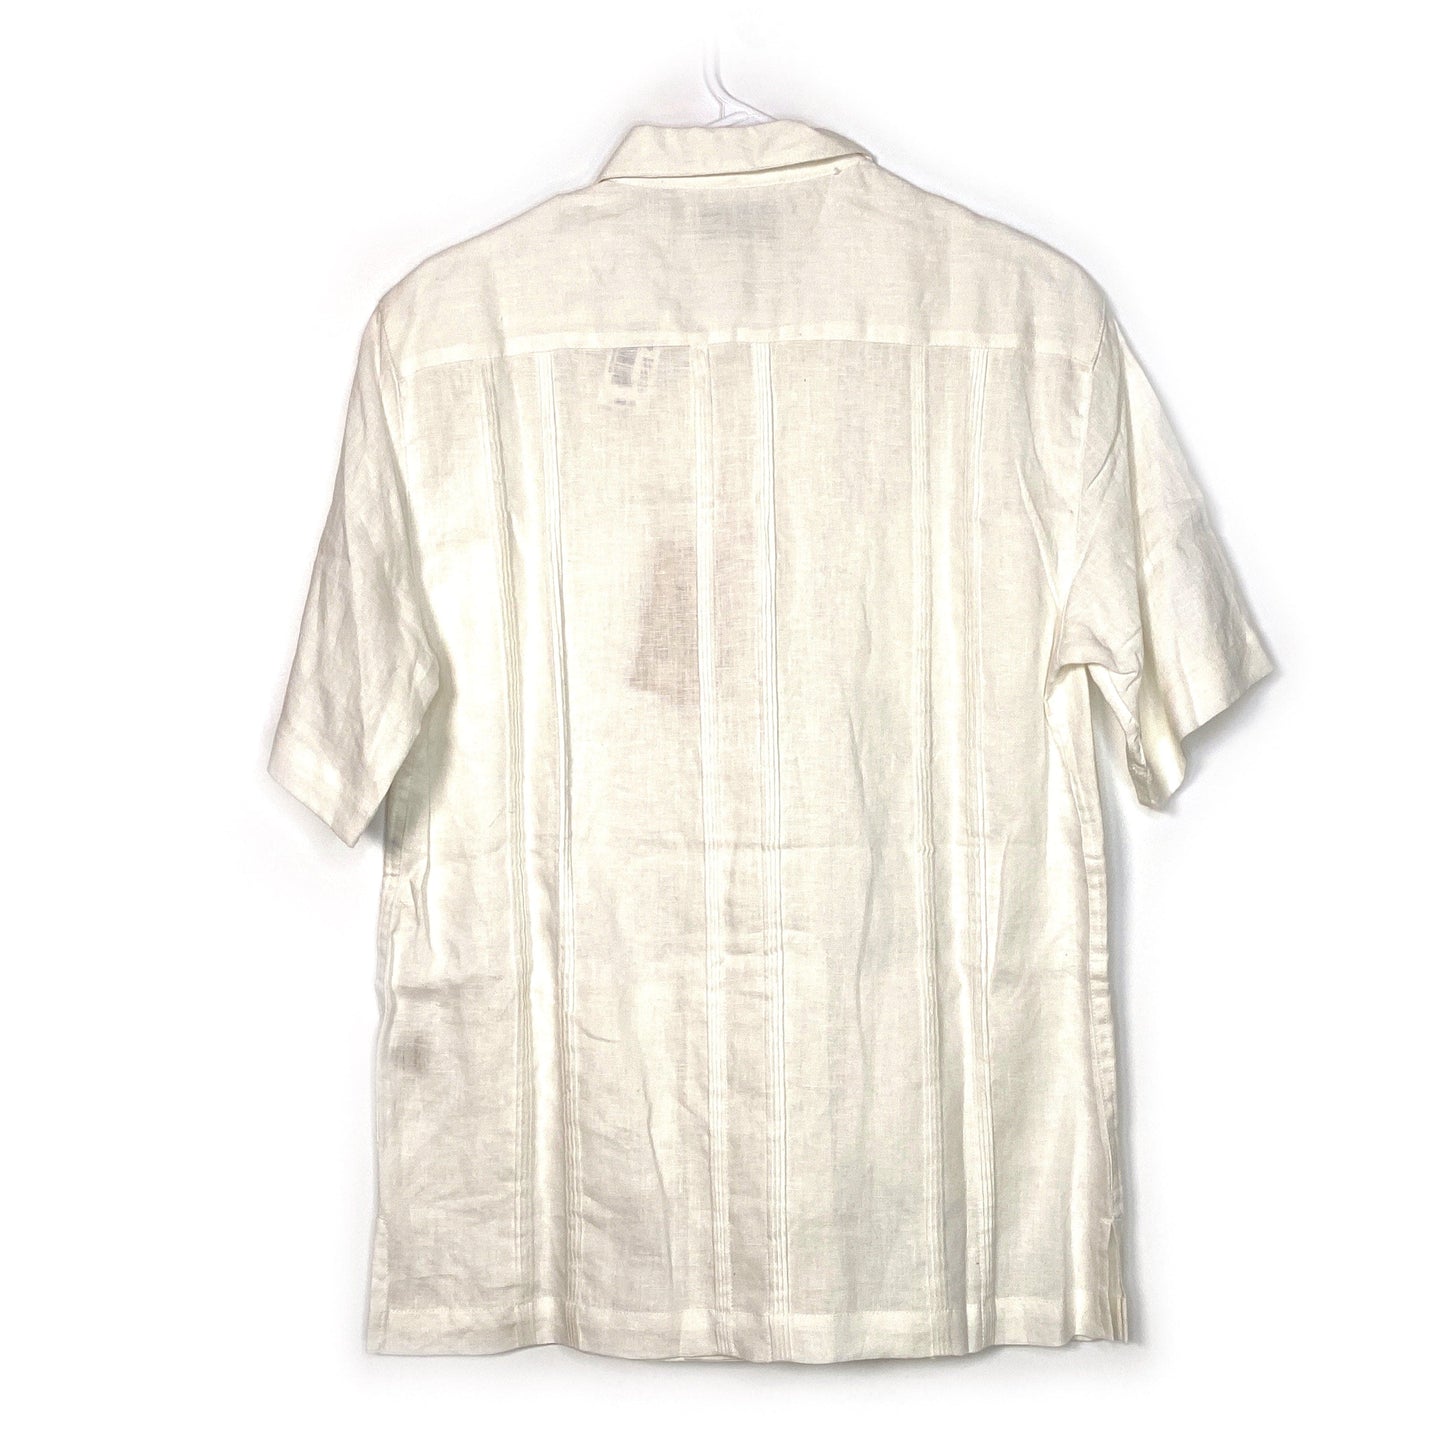 Caribbean Mens Size S Ivory White Linen Hawaiian Shirt Button-Up S/s NWT